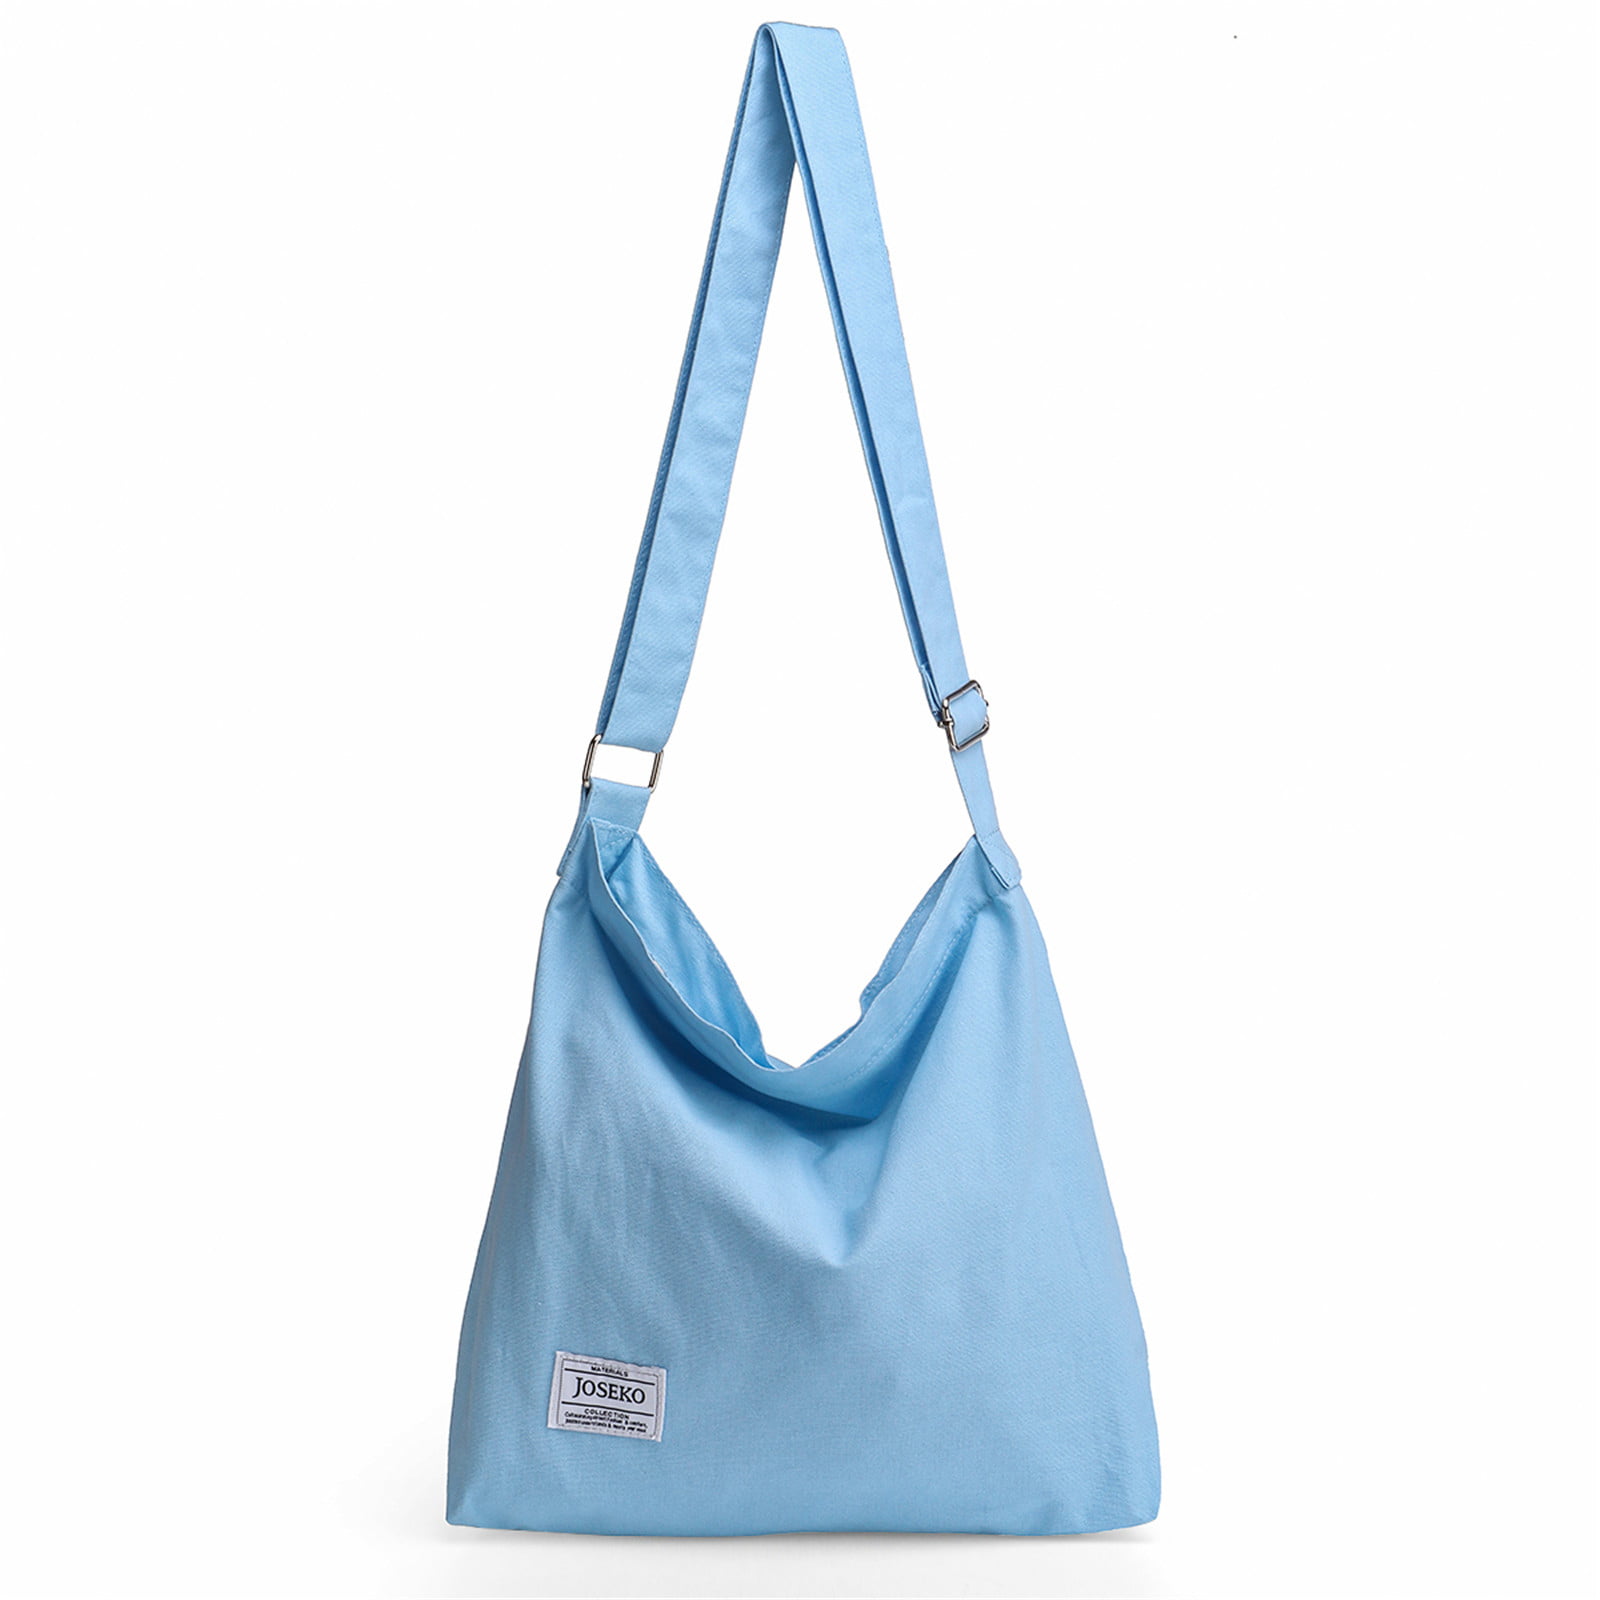 Womens Canvas Grocery Tote Handbags Casual CrossBody Shoulder Bag Rock Group Member Poster Zipper Shopping Hobo bag